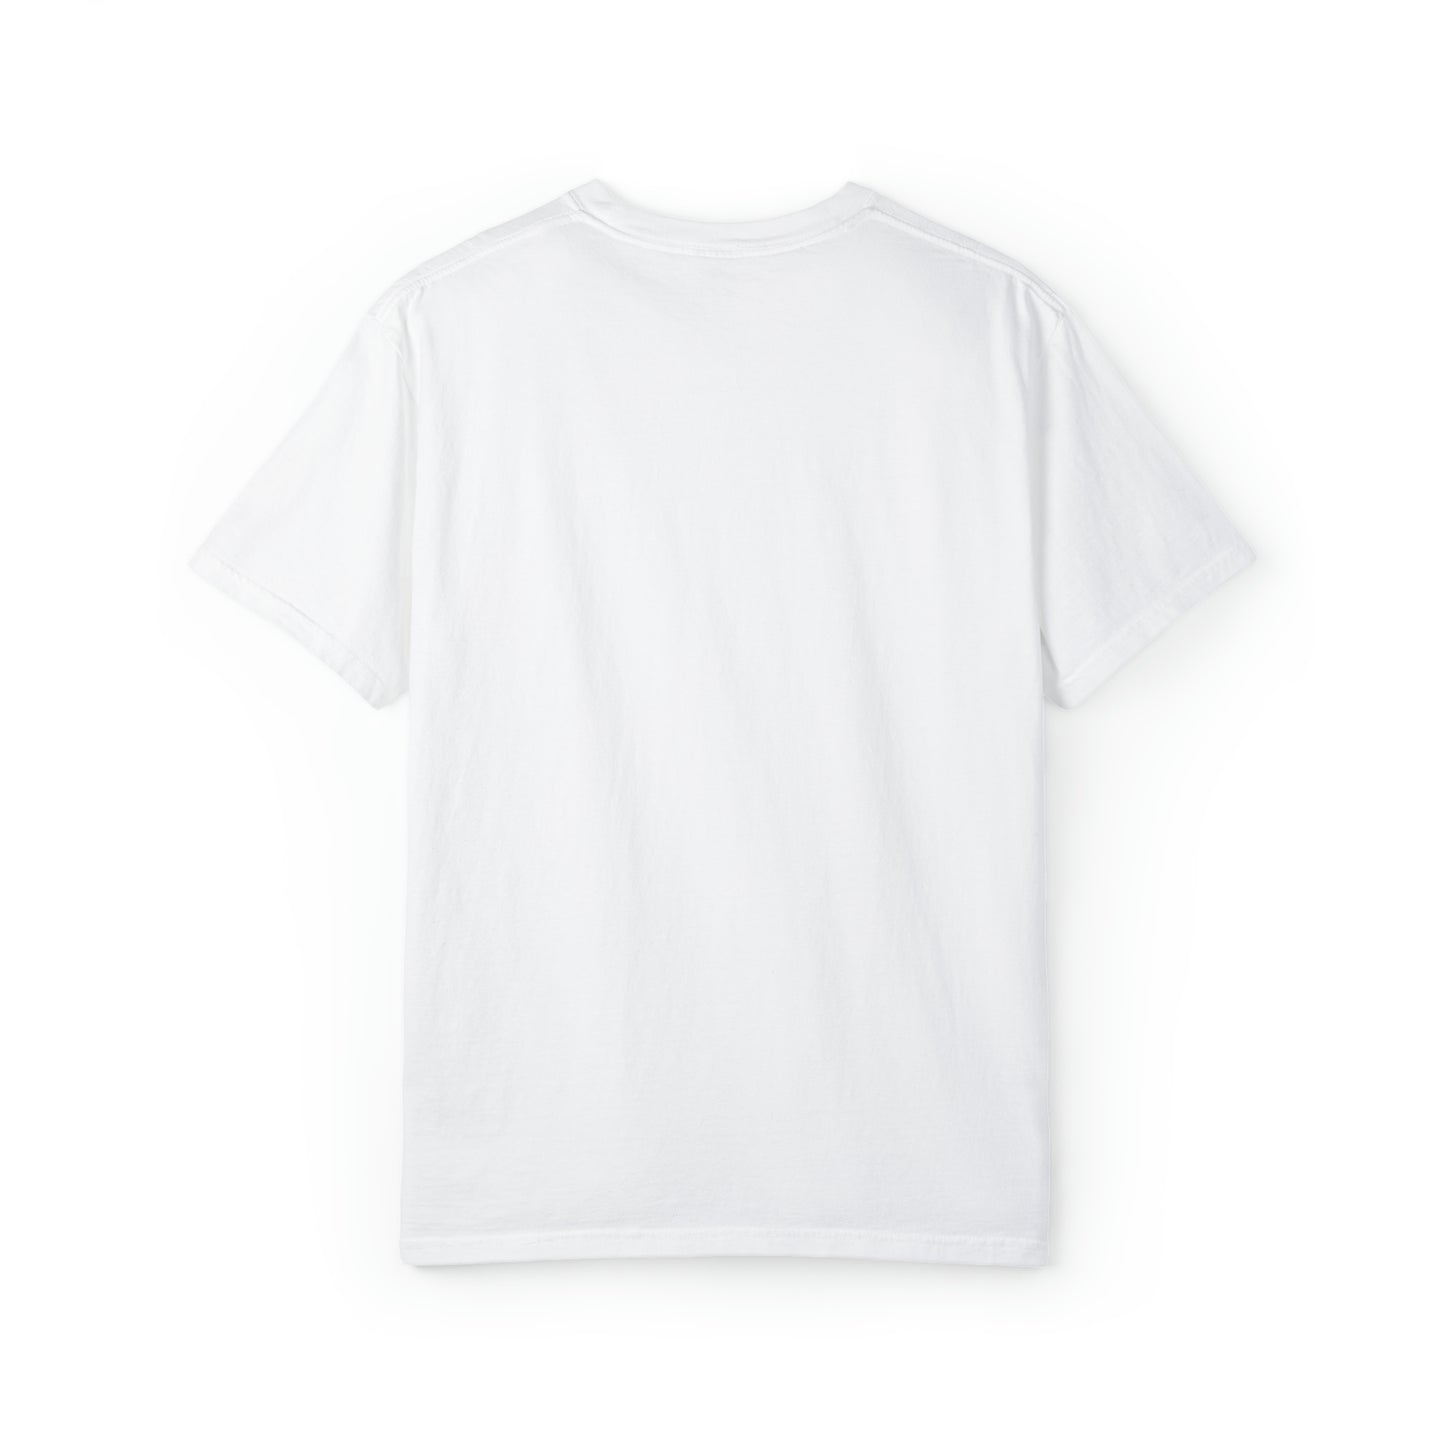 SOCAR And Wisemen - Unisex Garment-Dyed T-shirt